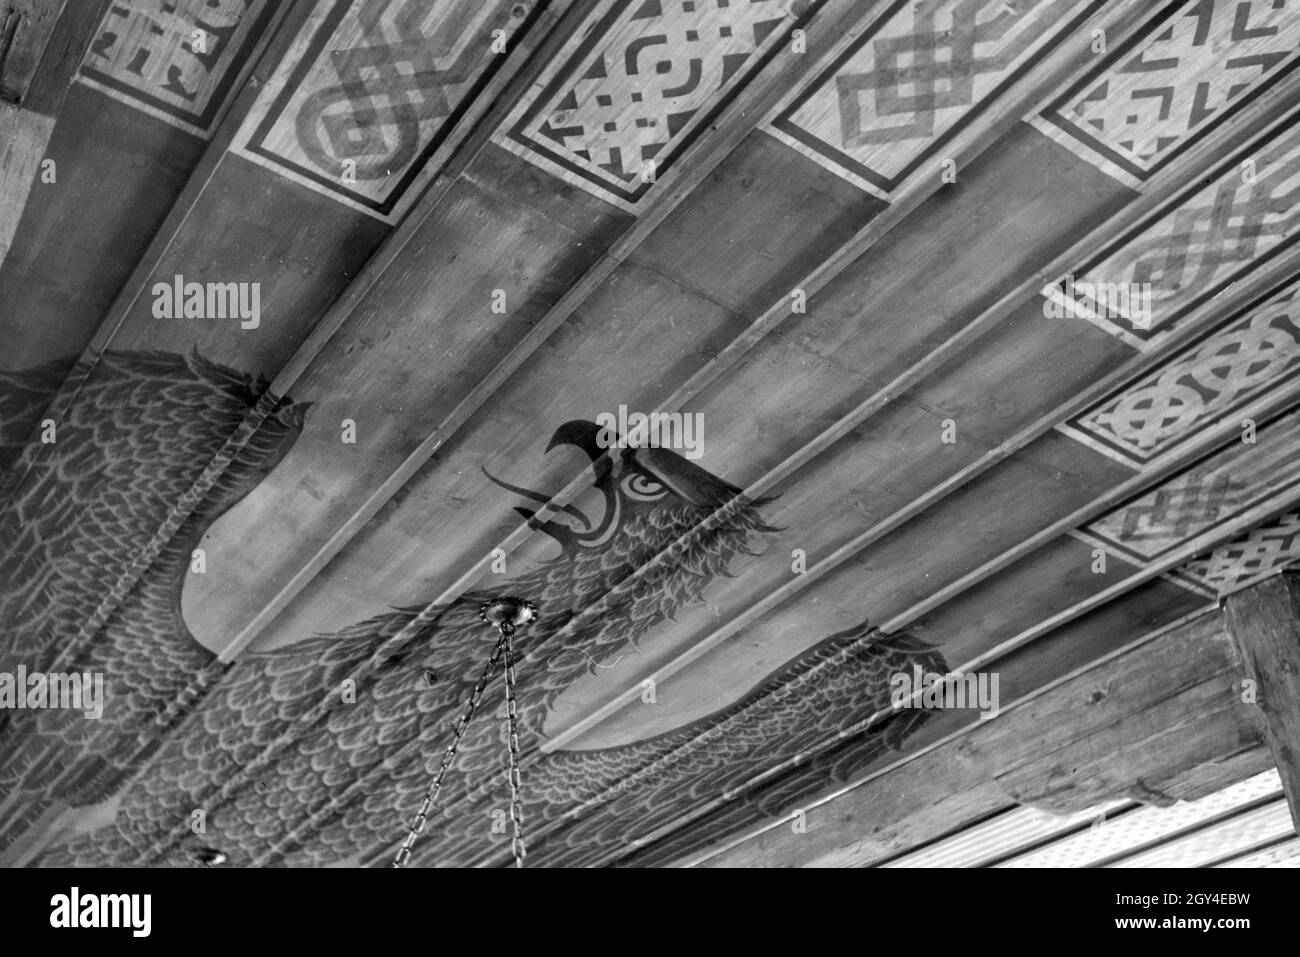 Decke mit Holzverkleidung,  Ornamenten und Adler / Reichsadler Motiv bemalt, Deutschland 1930er Jahre. Wooden ceiling painted with ornaments and an eagle / imperial eagle, Germany 1930s. Stock Photo